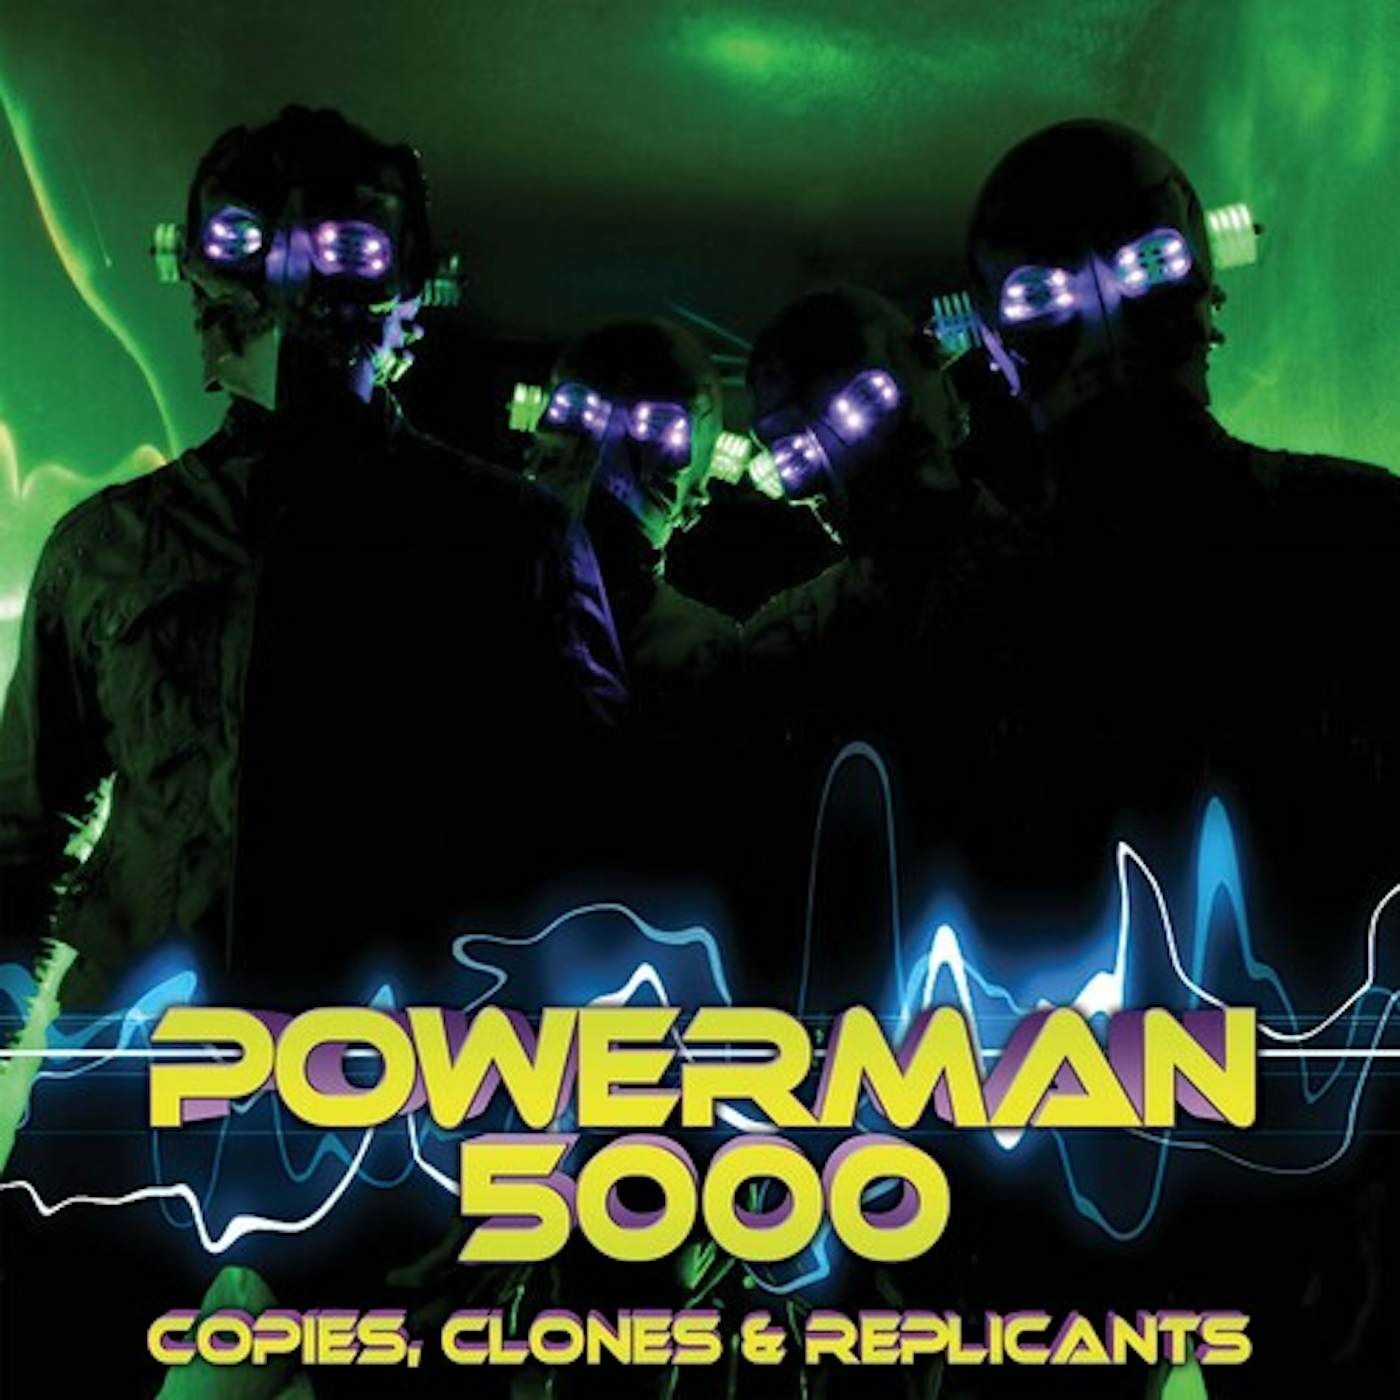 Powerman 5000 COPIES, CLONES & REPLICANTS (GREEN/BLACK SPLATTER VINYL) Vinyl Record